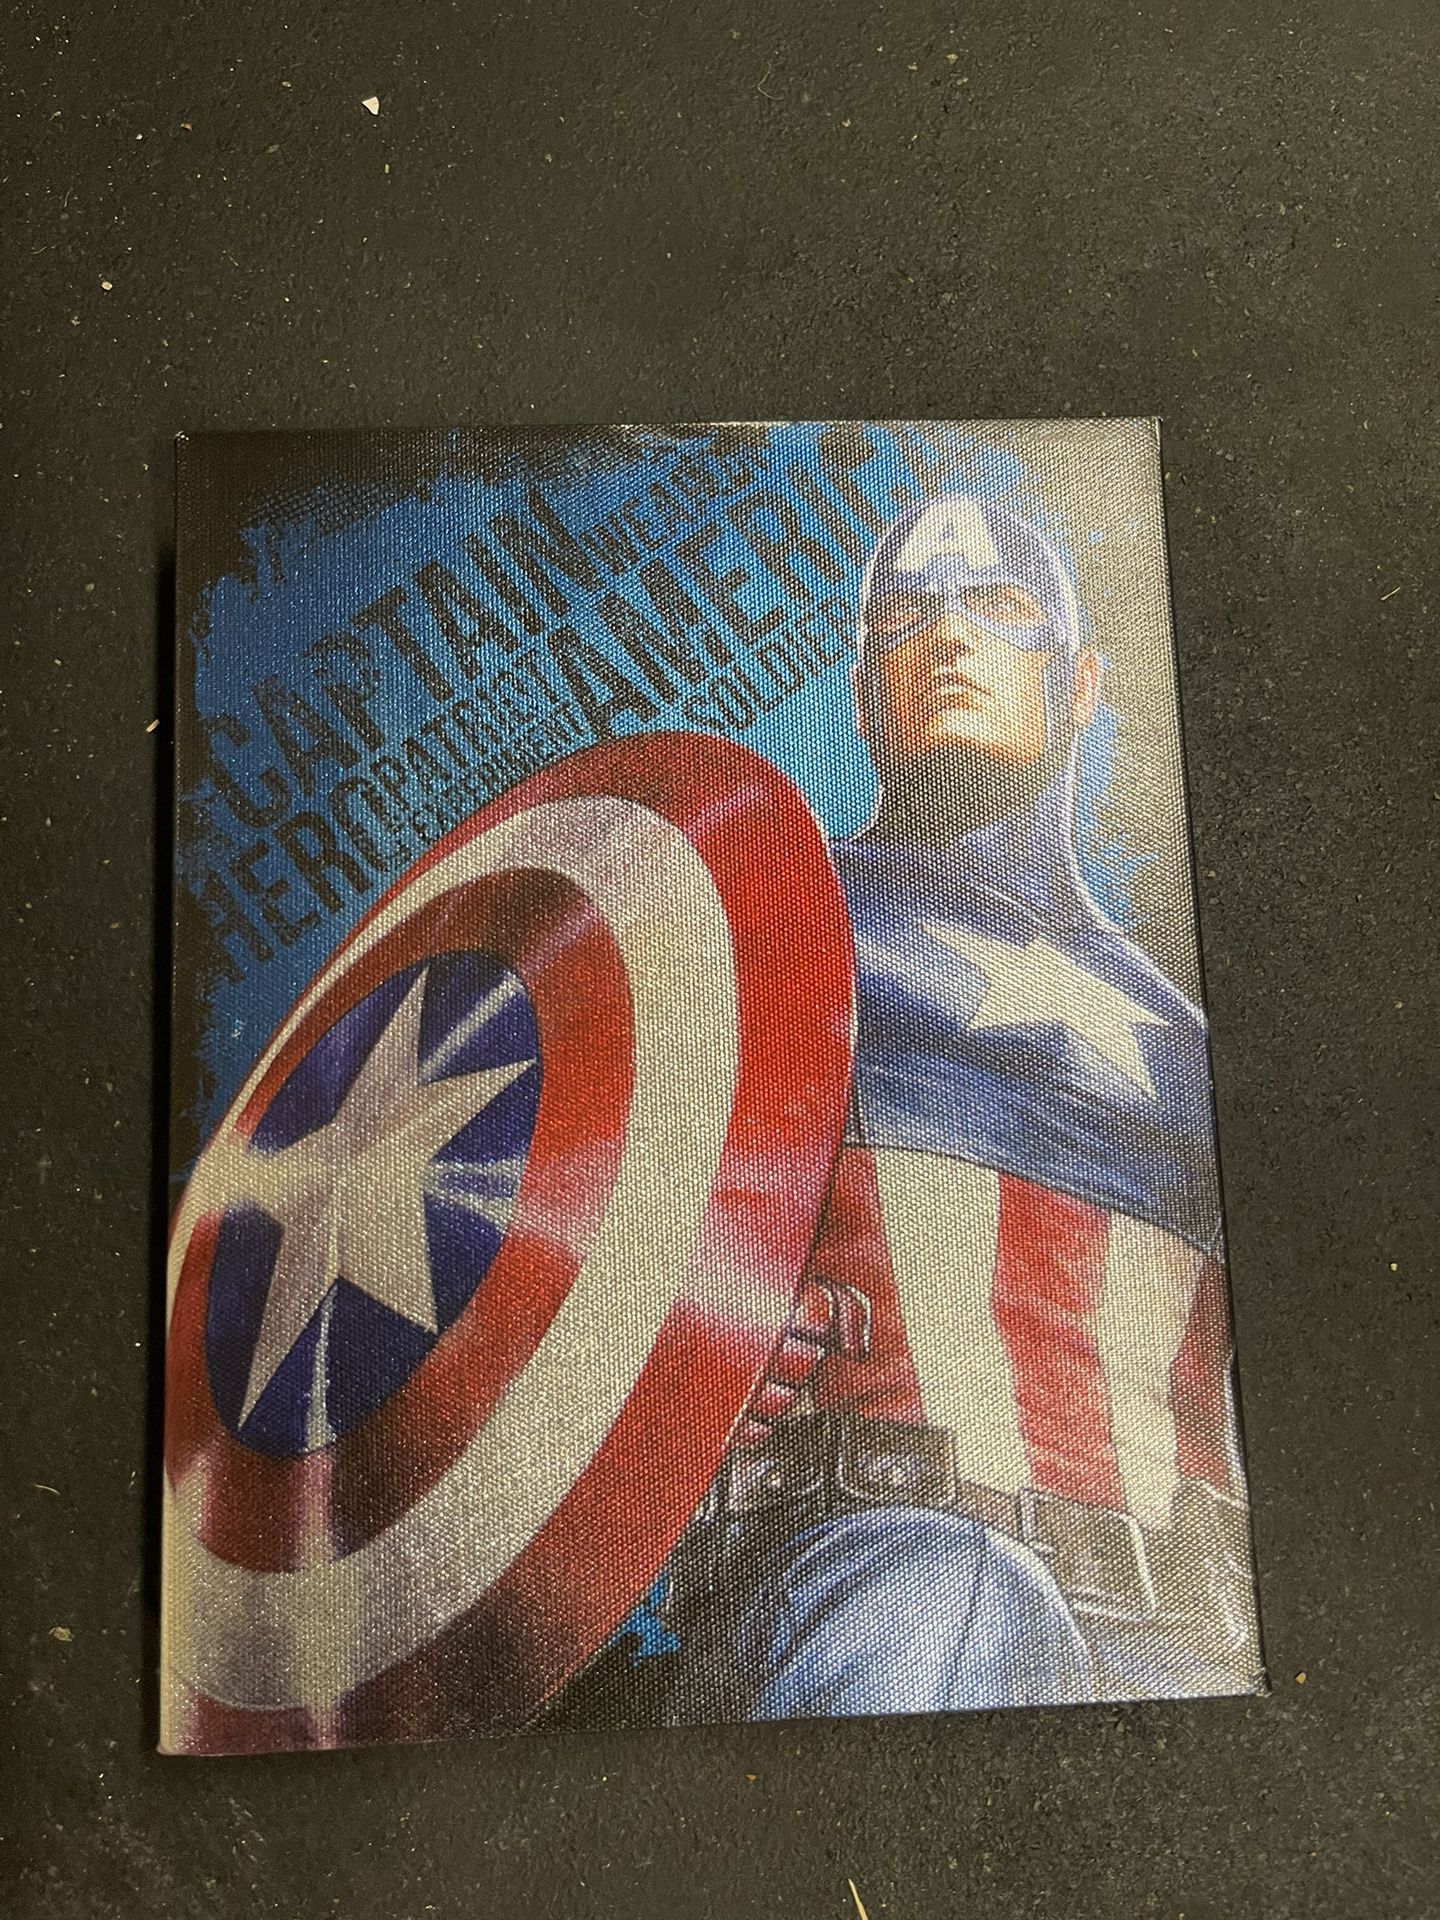  Captain America Picture 